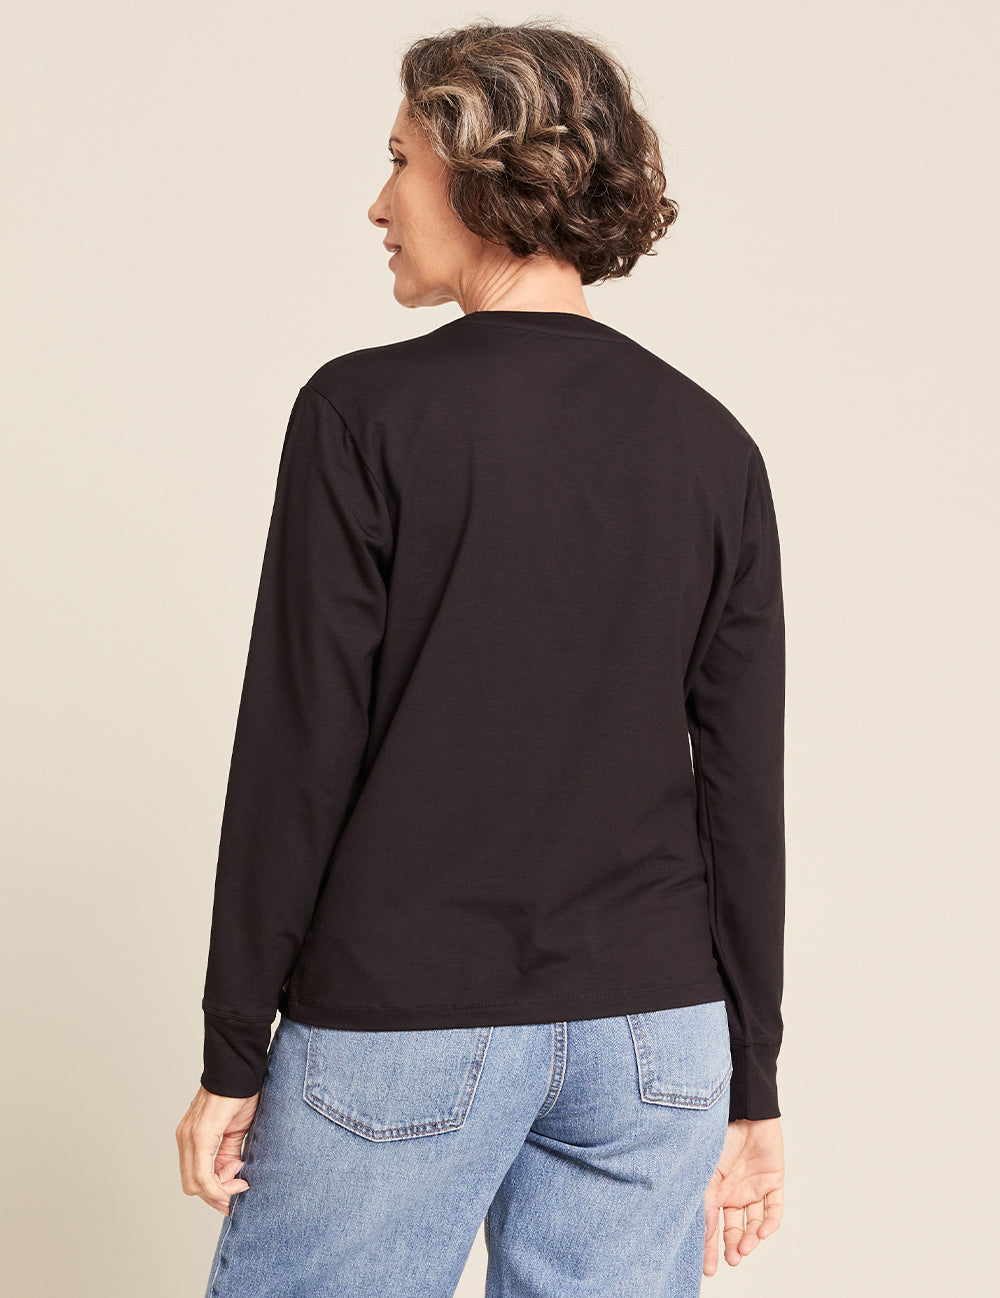 Women_s-Classic-Long-Sleeve-T-Shirt-black-back.jpg